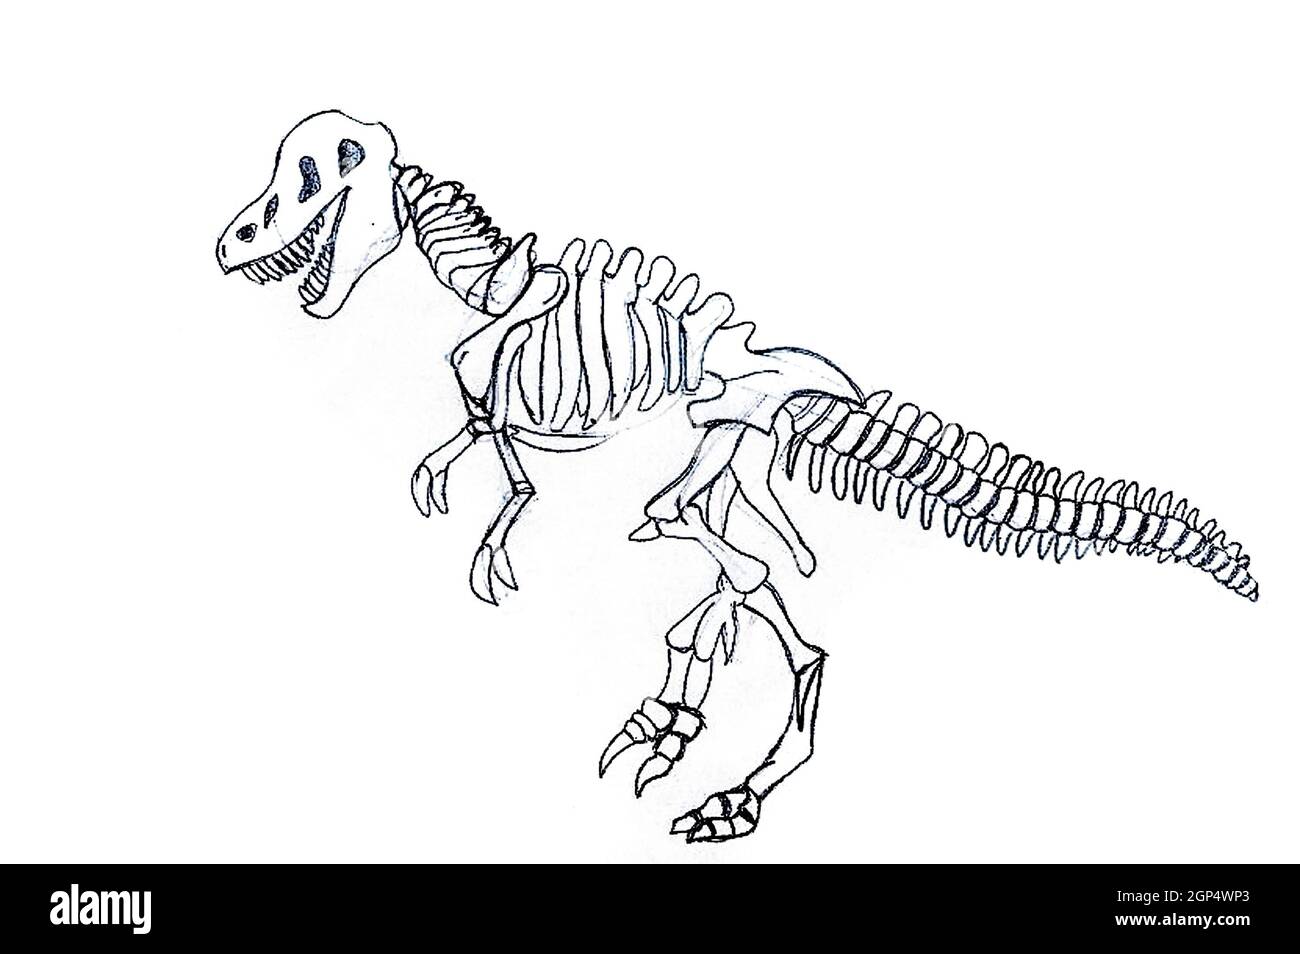 t rex bones drawing - Google Search  Dinosaur drawing, Skull drawing,  Skeleton drawings